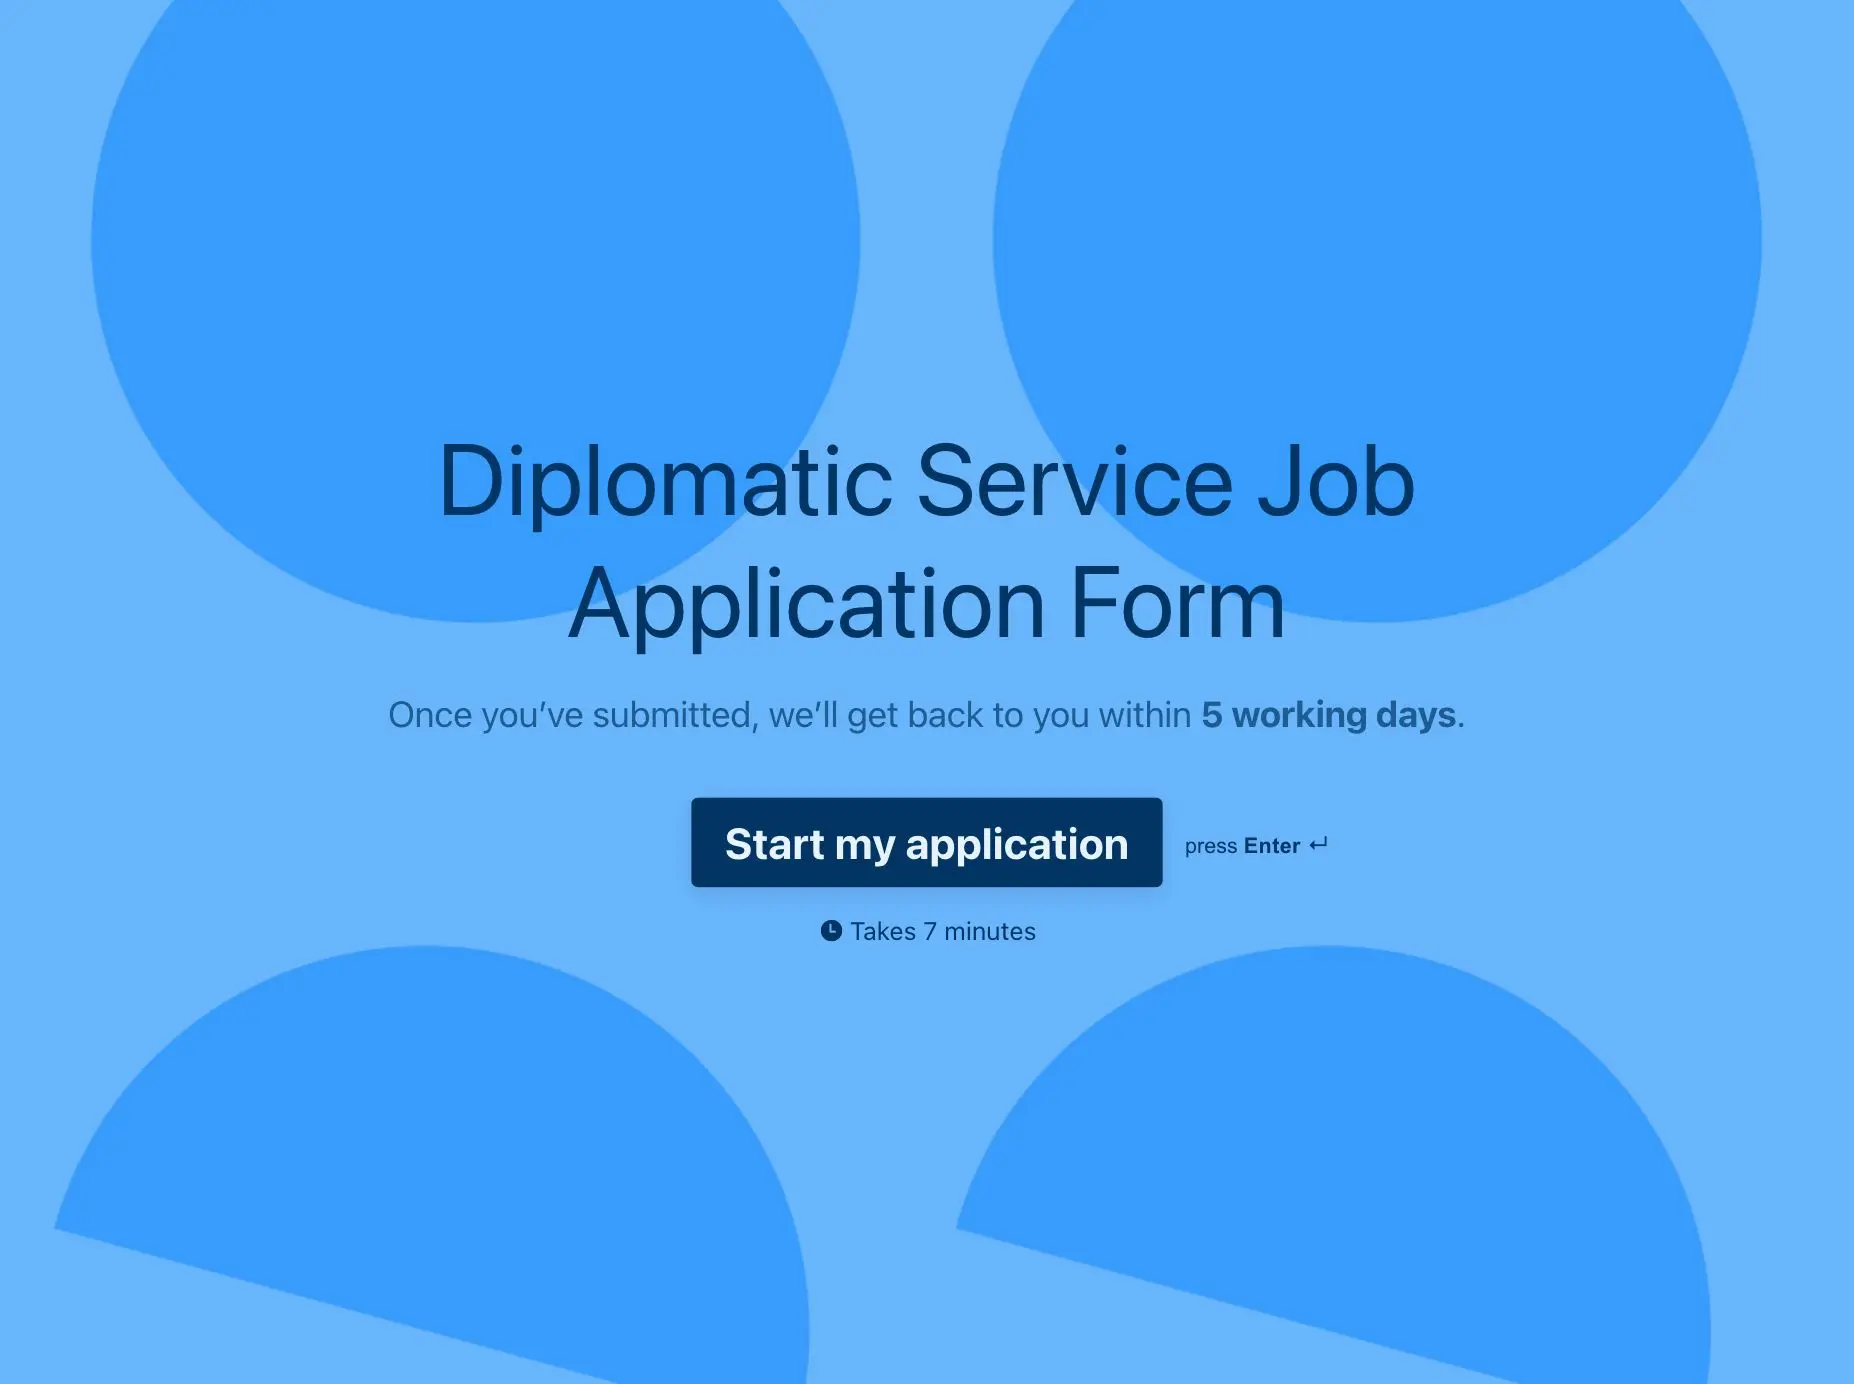 Diplomatic Service Job Application Form Template Hero